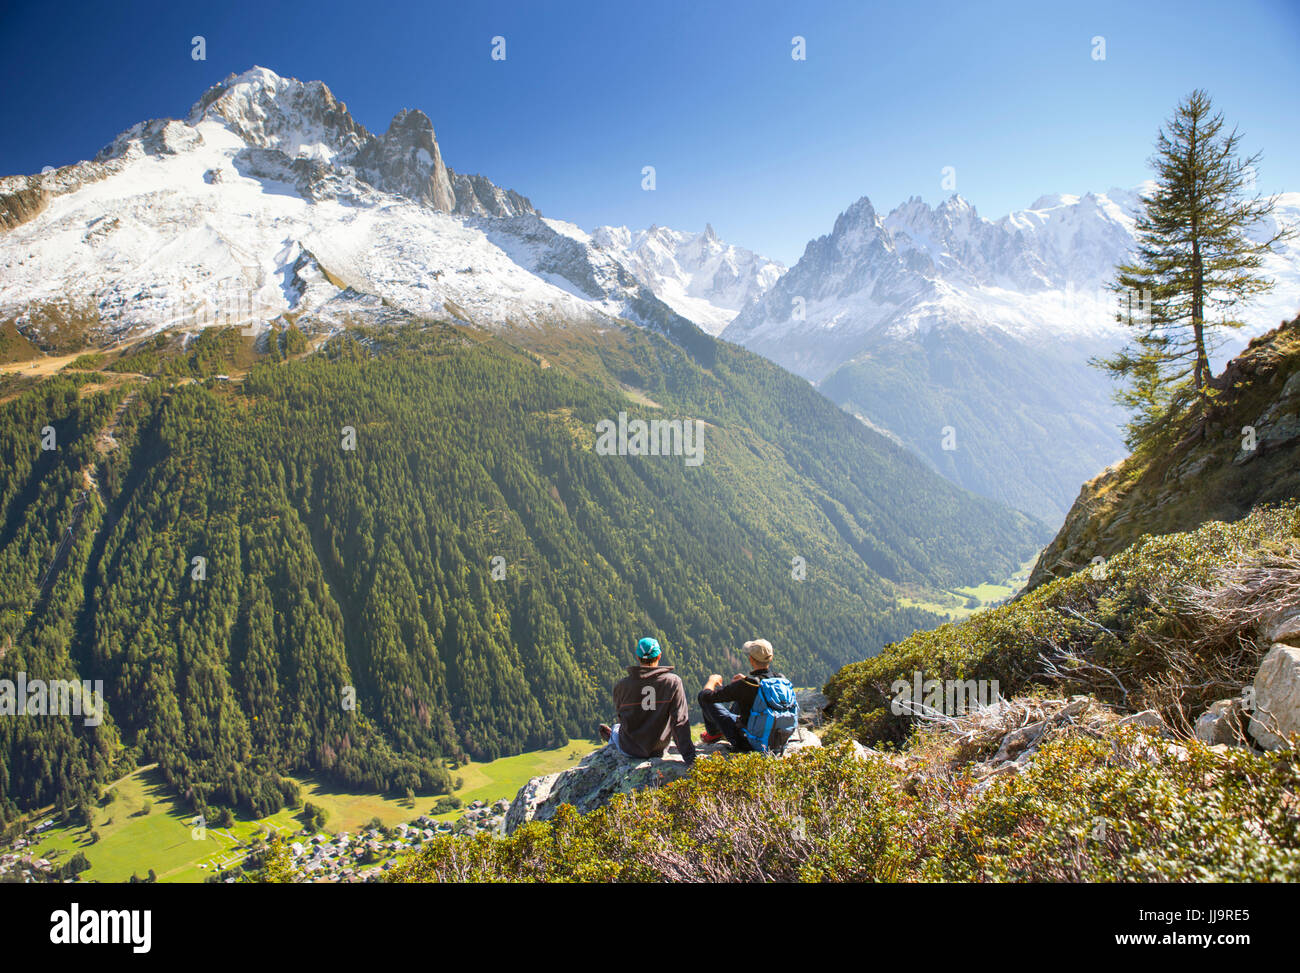 Tour du mont blanc hi-res stock photography and images - Alamy